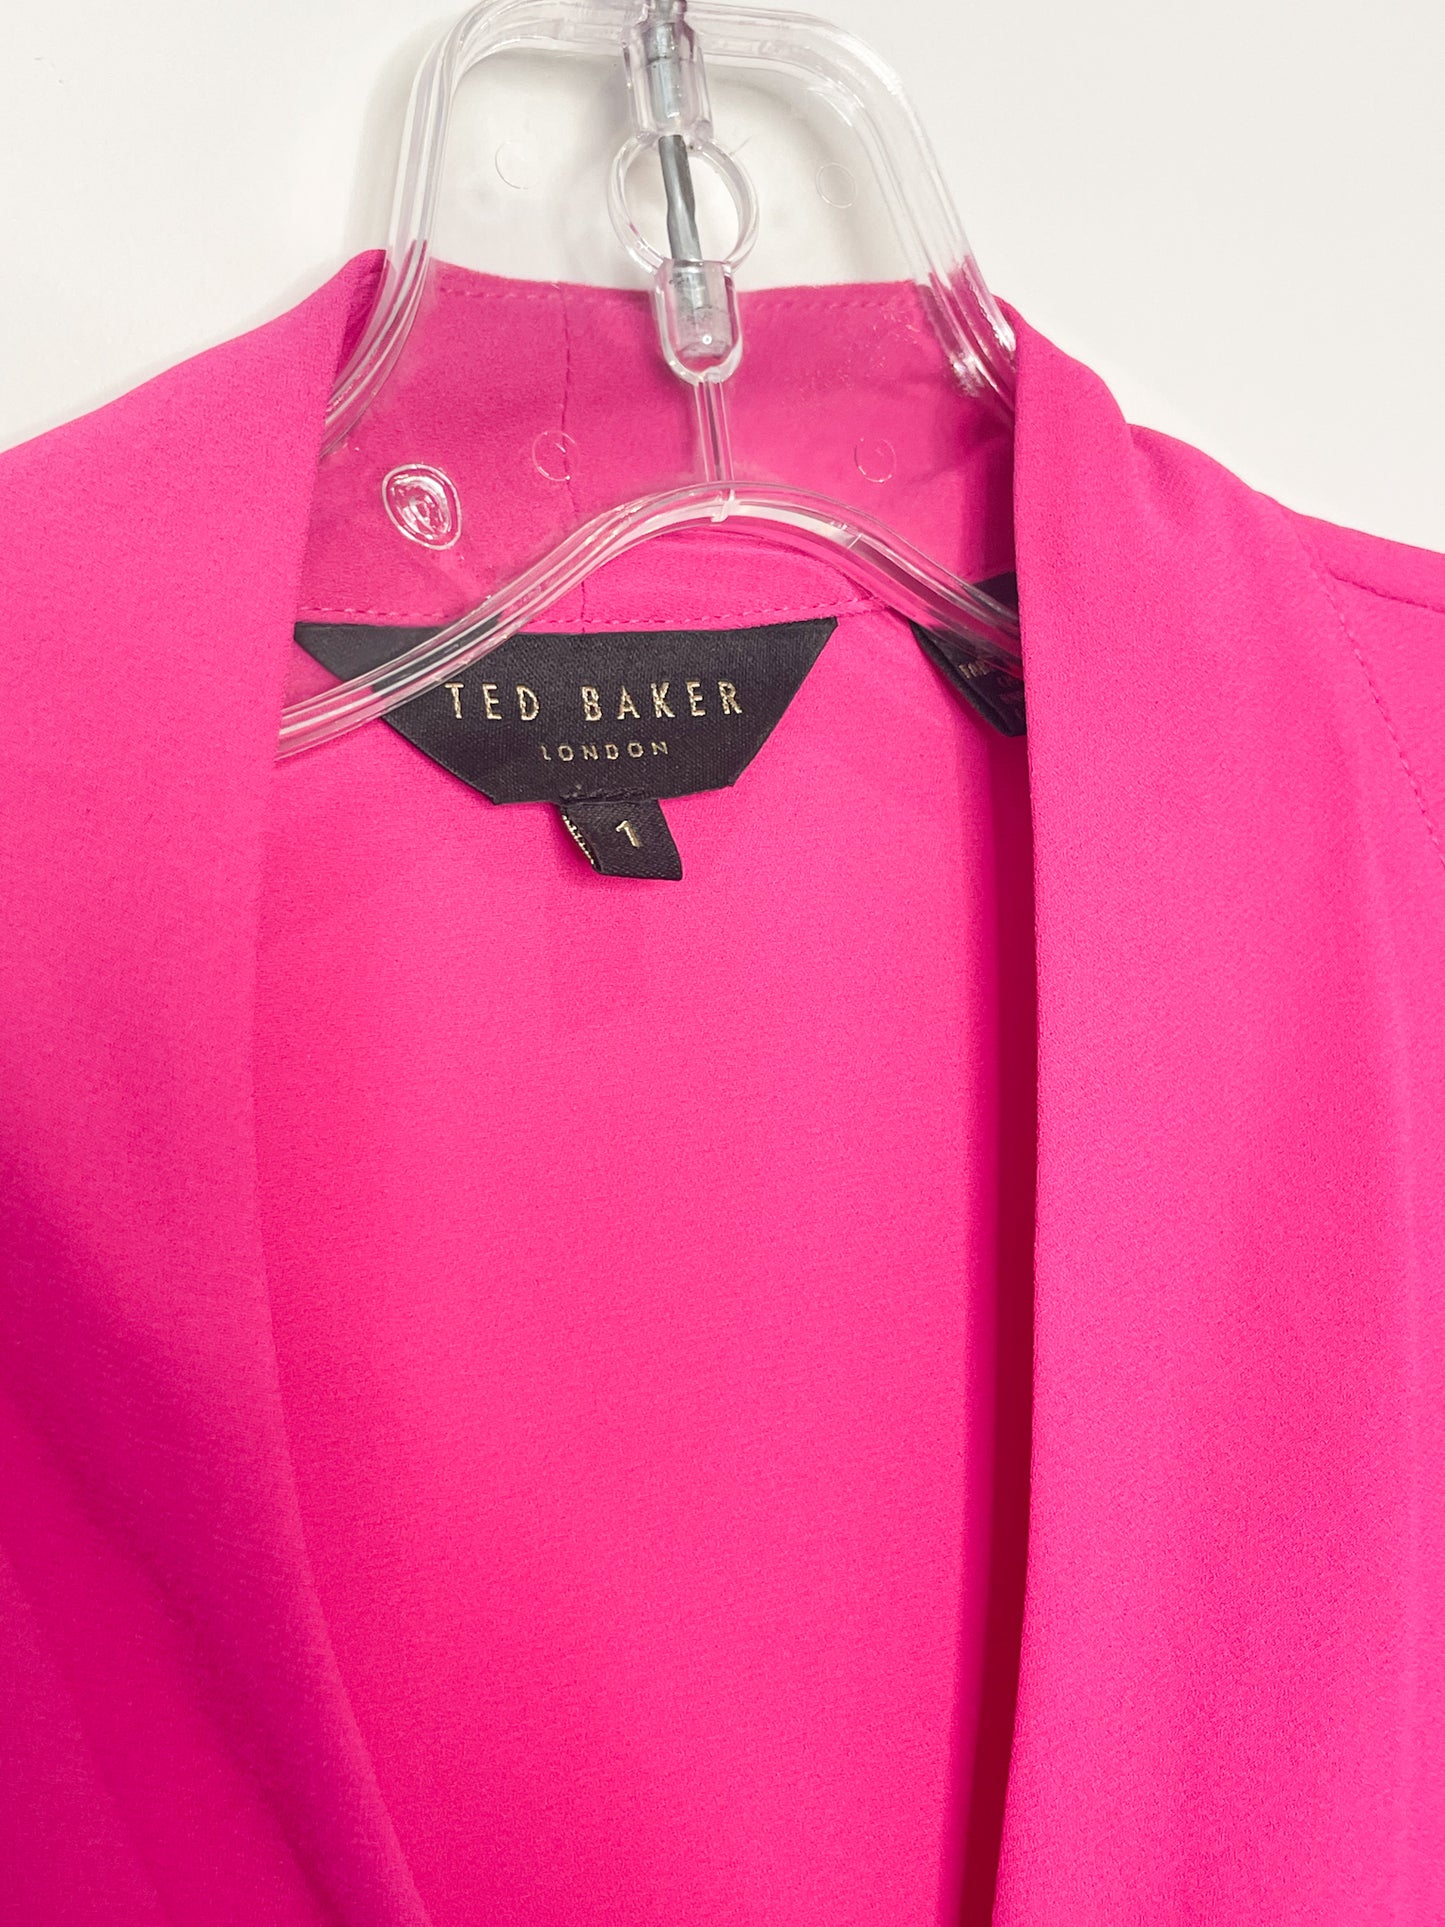 Ted Baker Barbie Pink Long Sleeve Zipper Cuff Top - Size 4